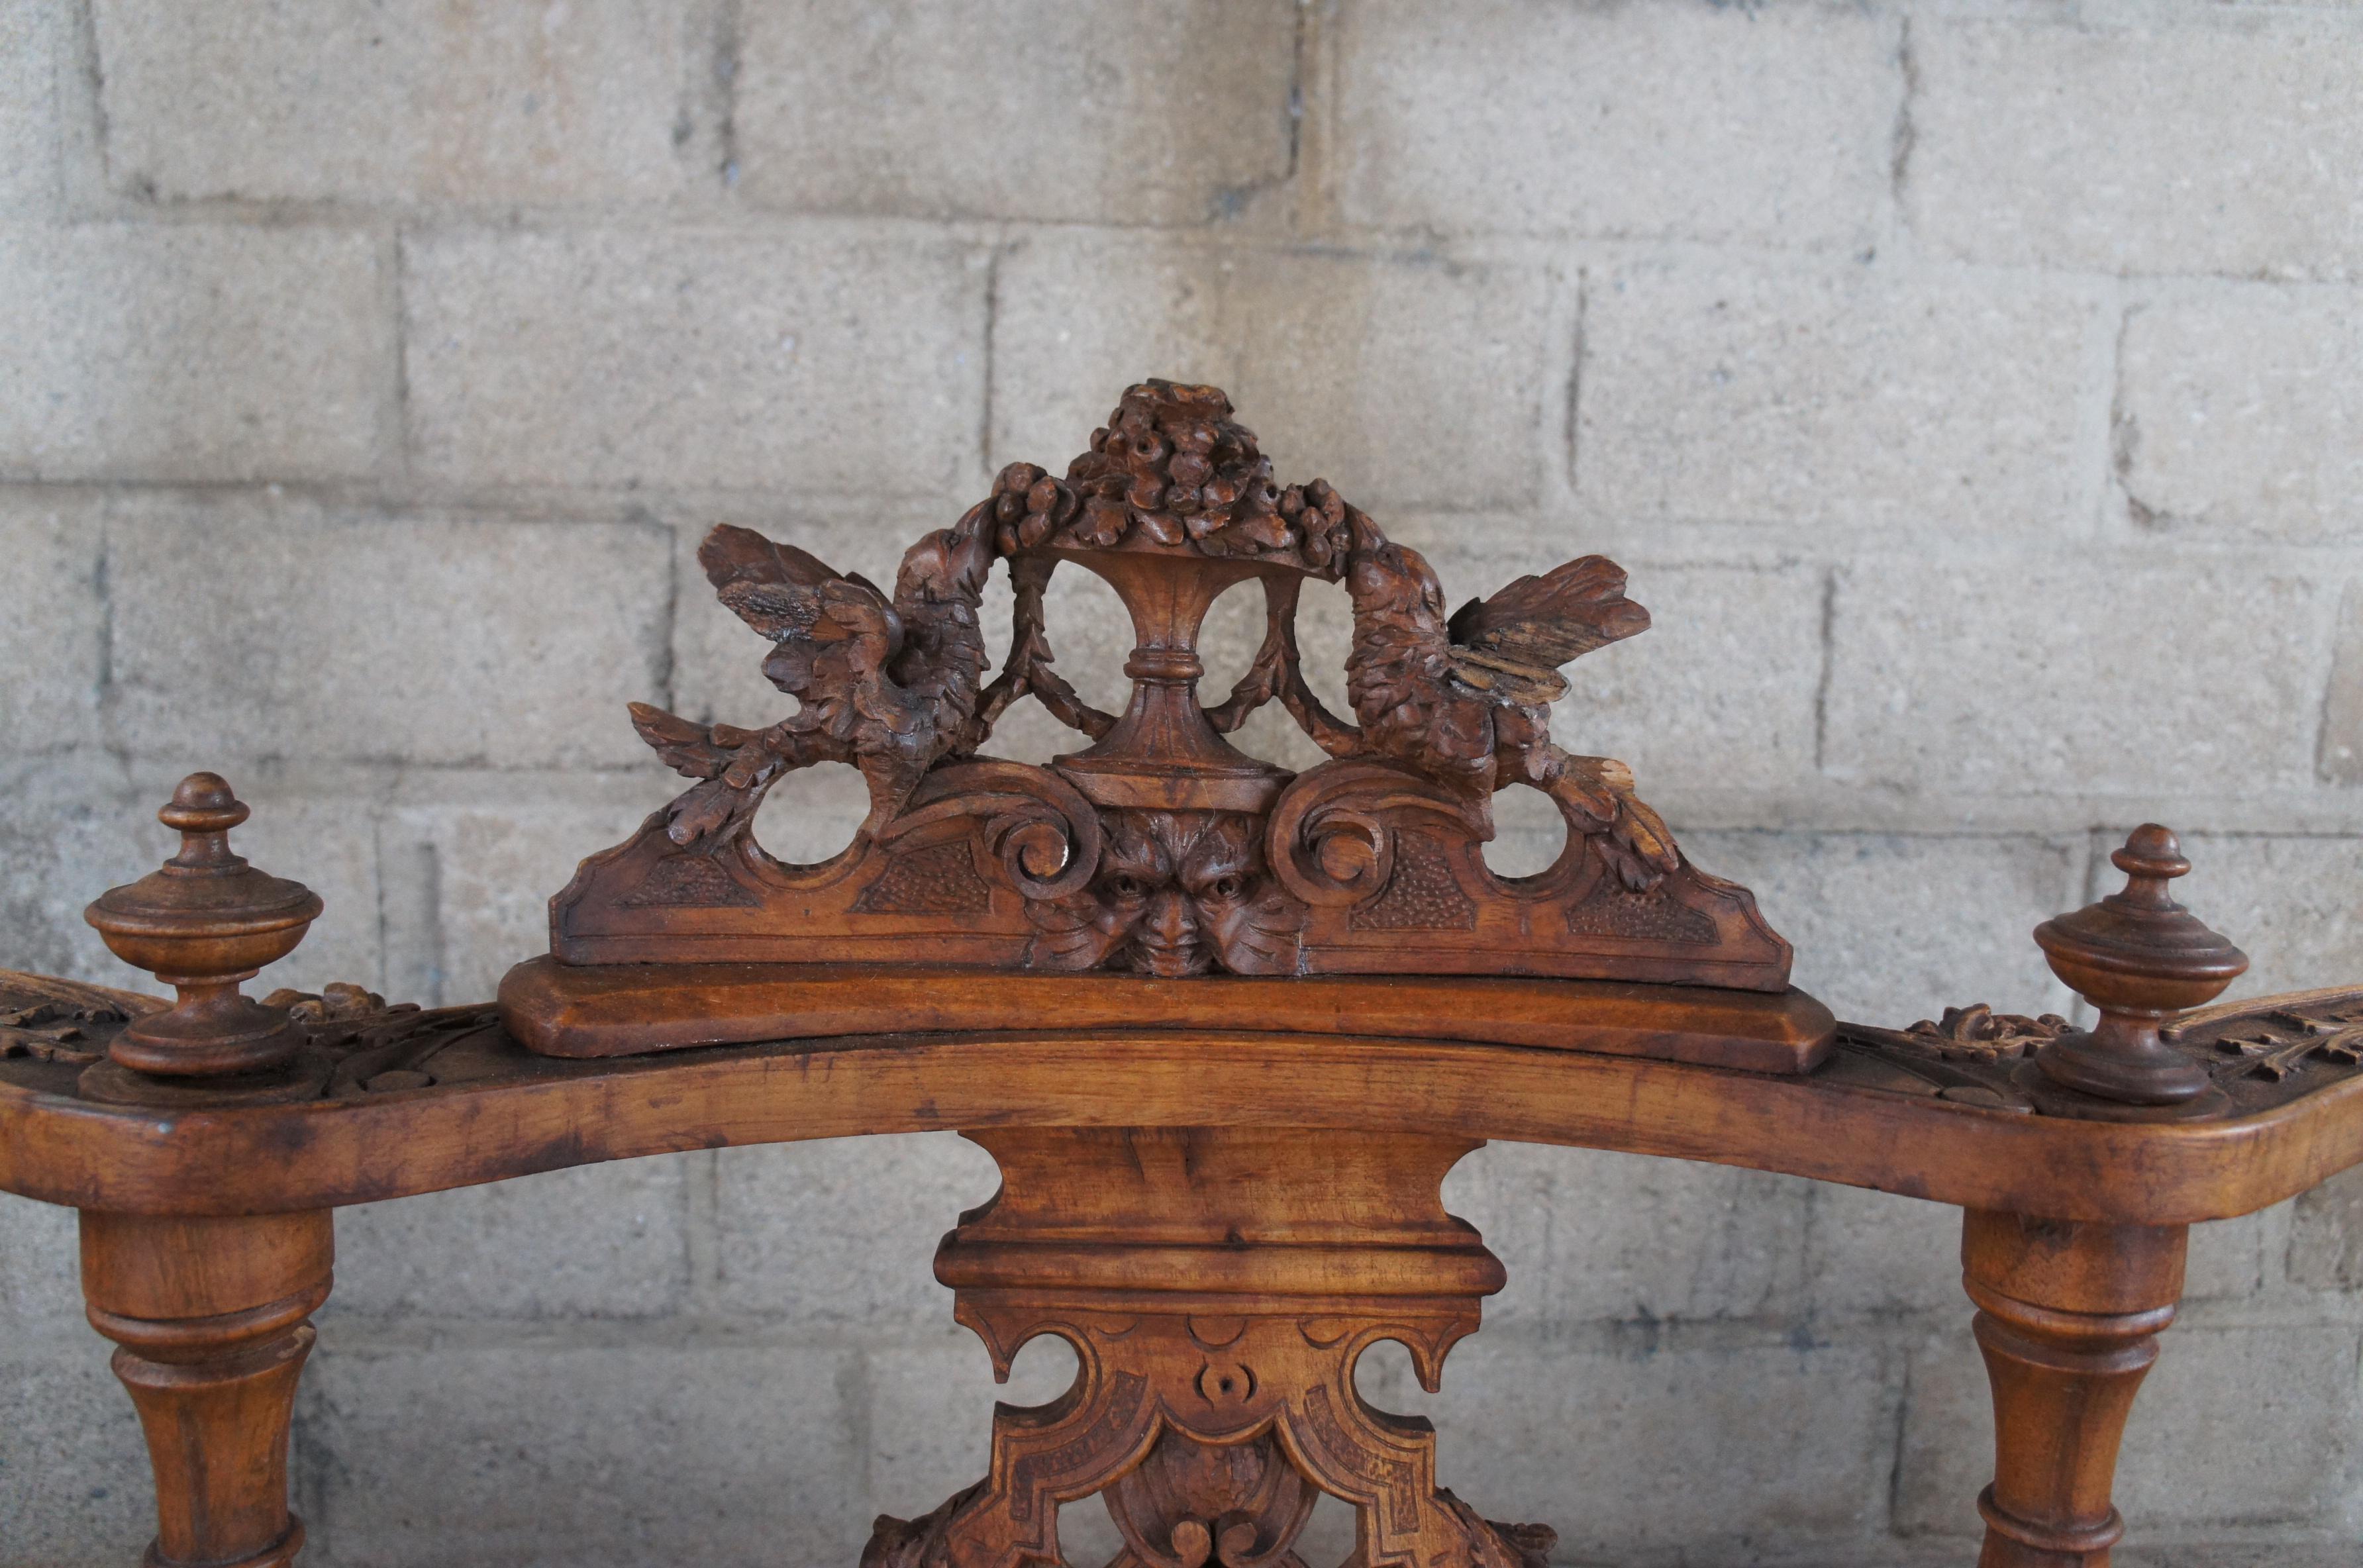 Upholstery Antique Italian Renaissance Revival Walnut Carved Parlor Settee Loveseat 60